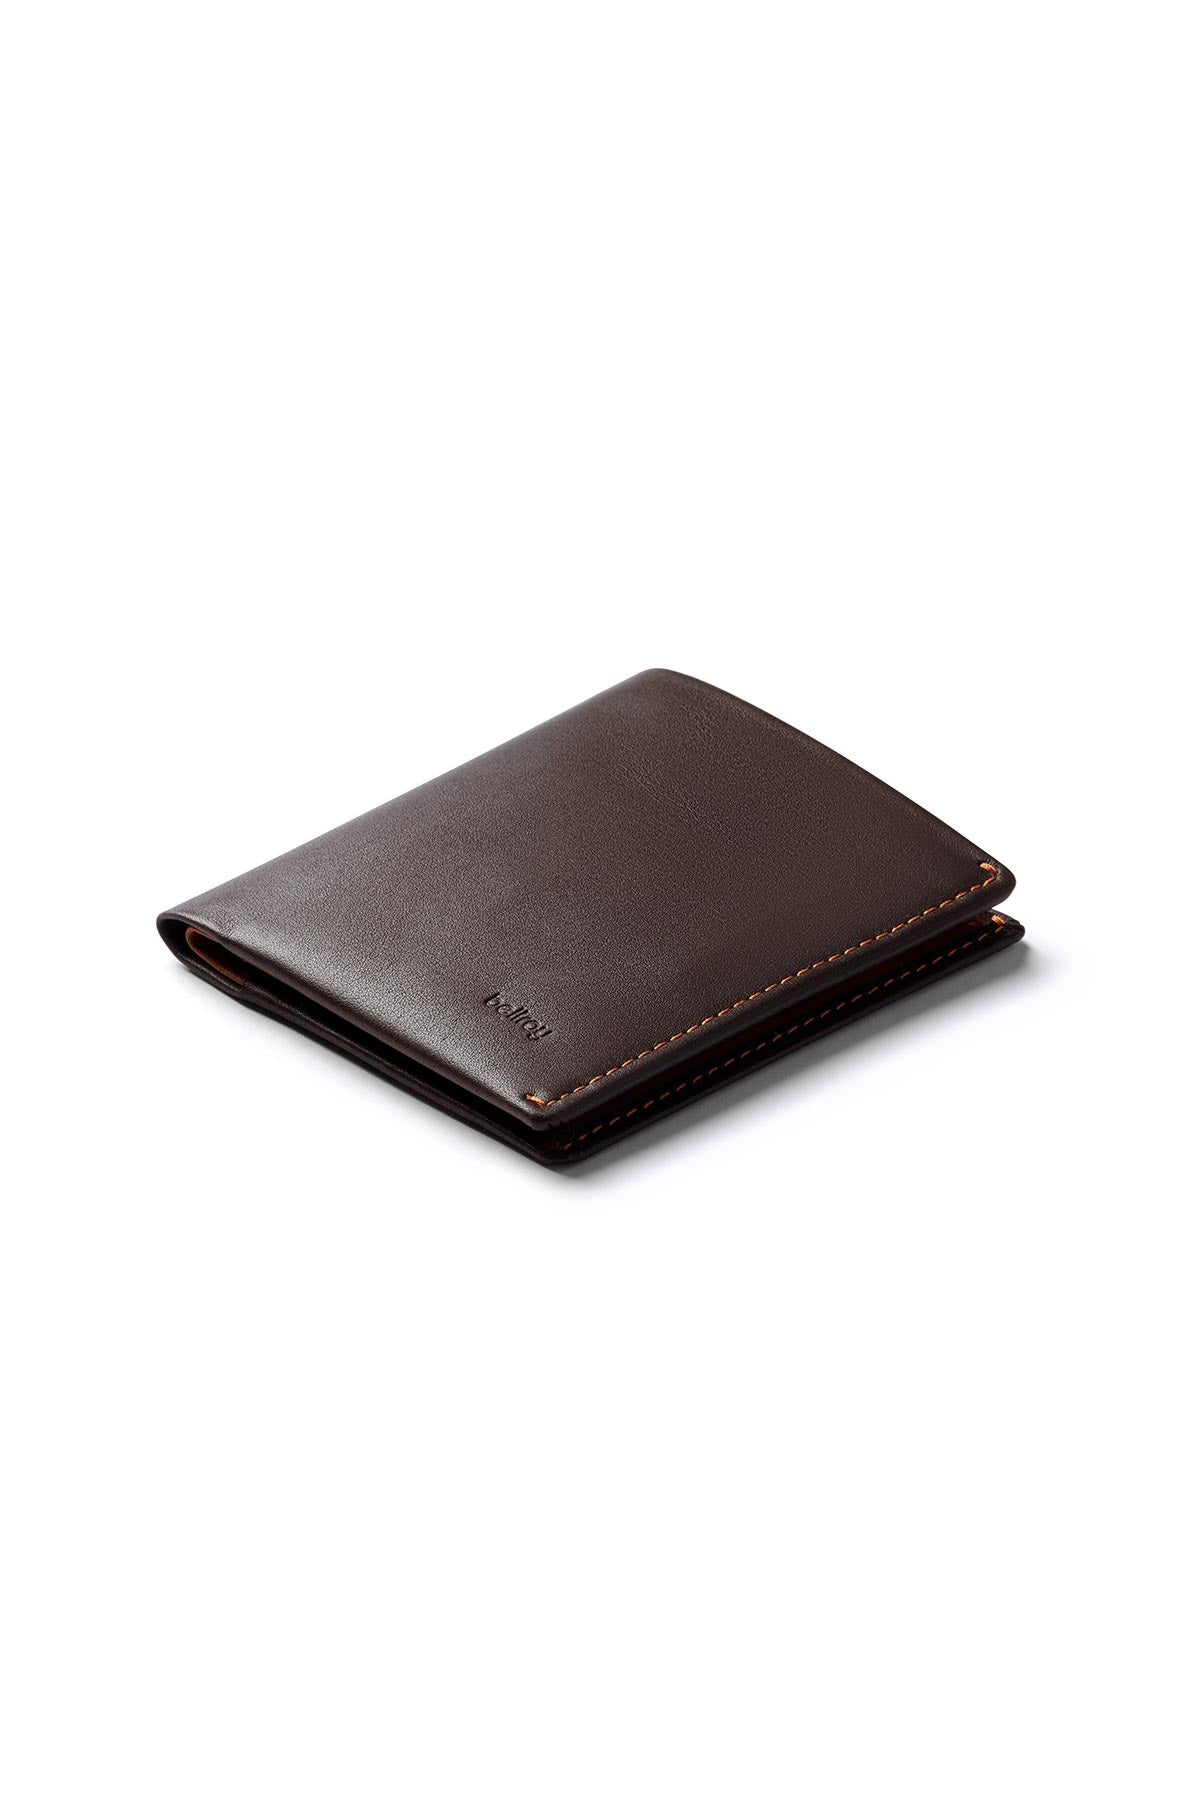 Bellroy - RFID Note Sleeve Wallet - Java Caramel